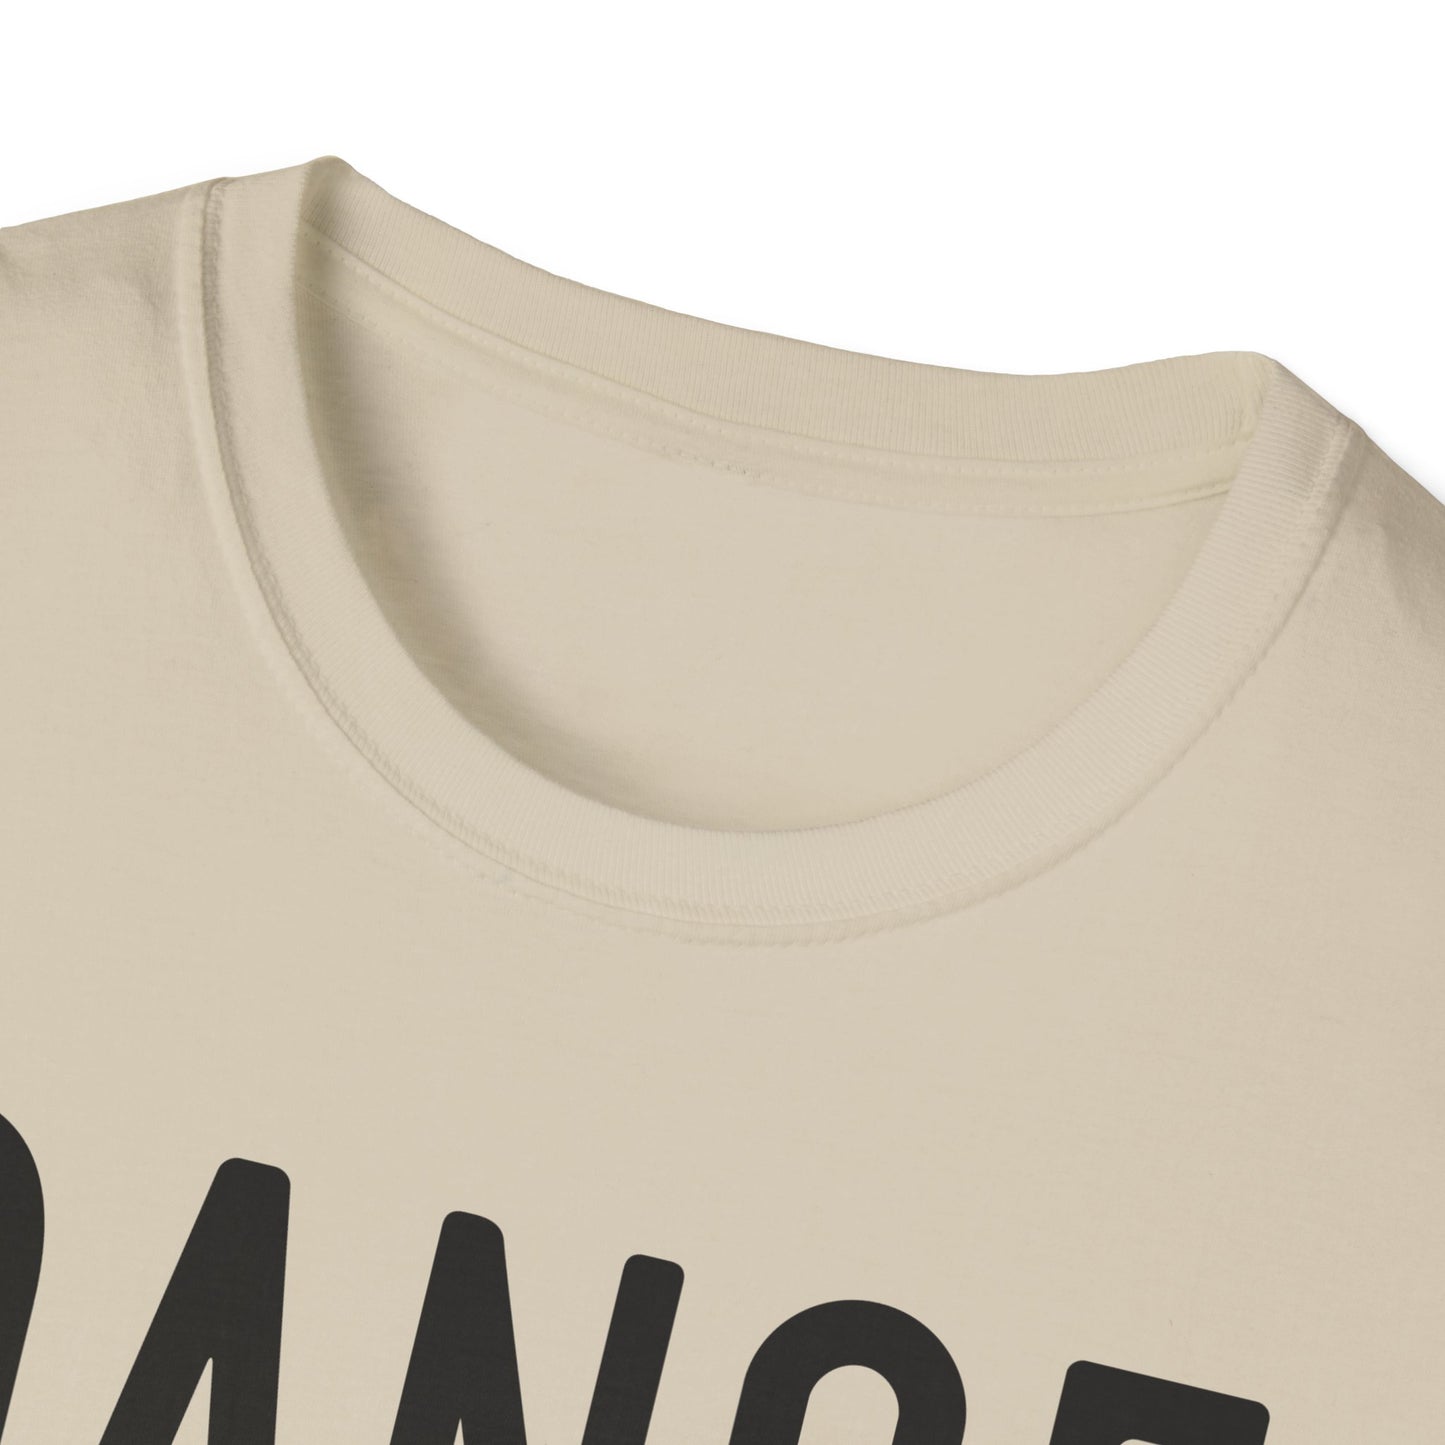 Dance Mama - Unisex Softstyle T-Shirt